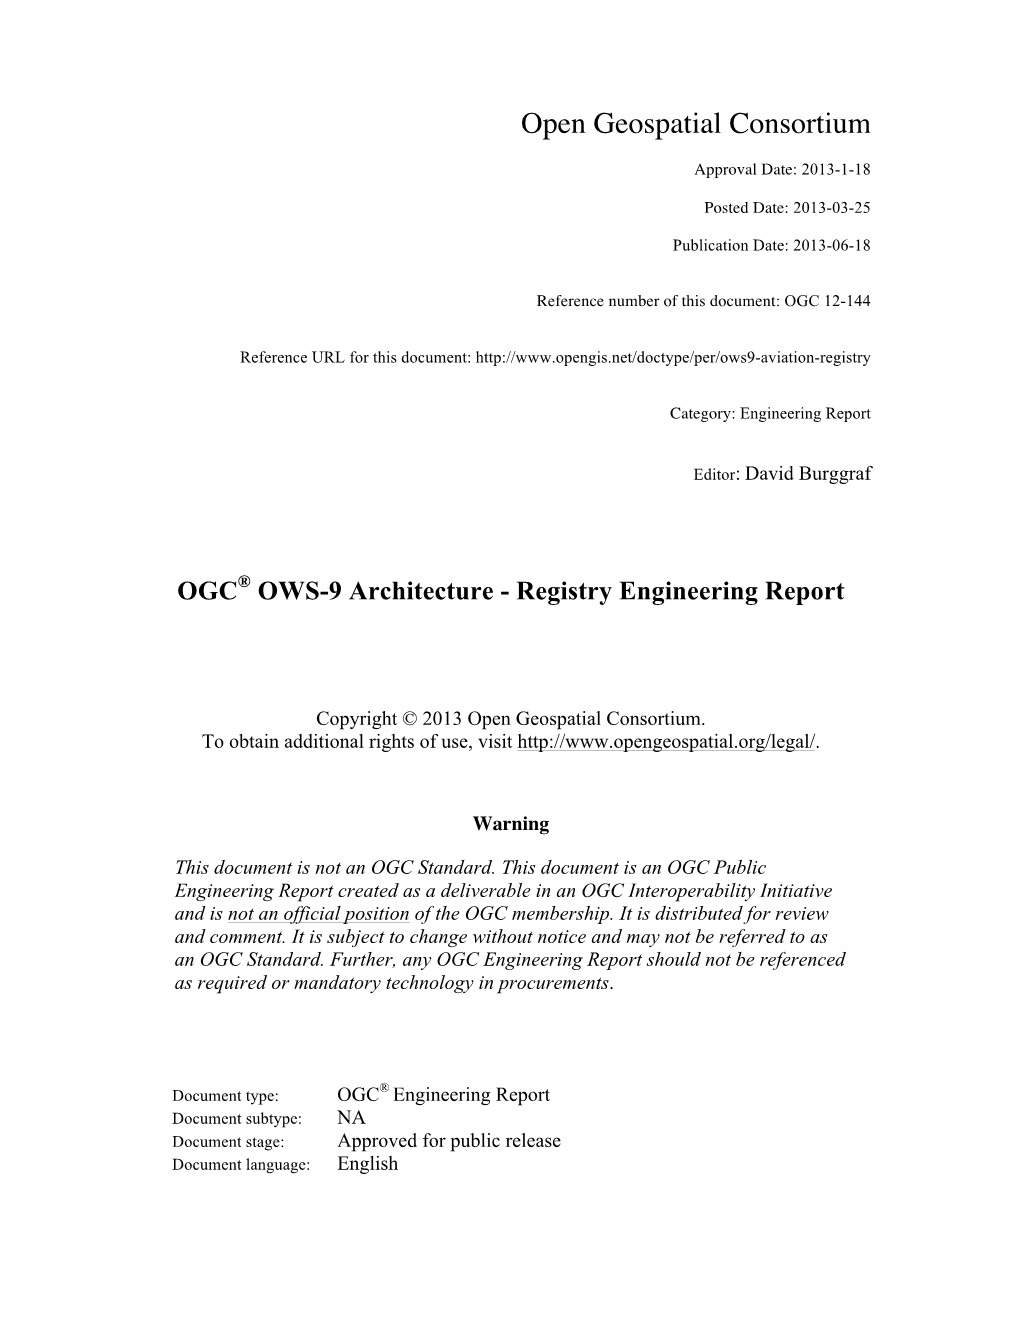 Registry Engineering Report